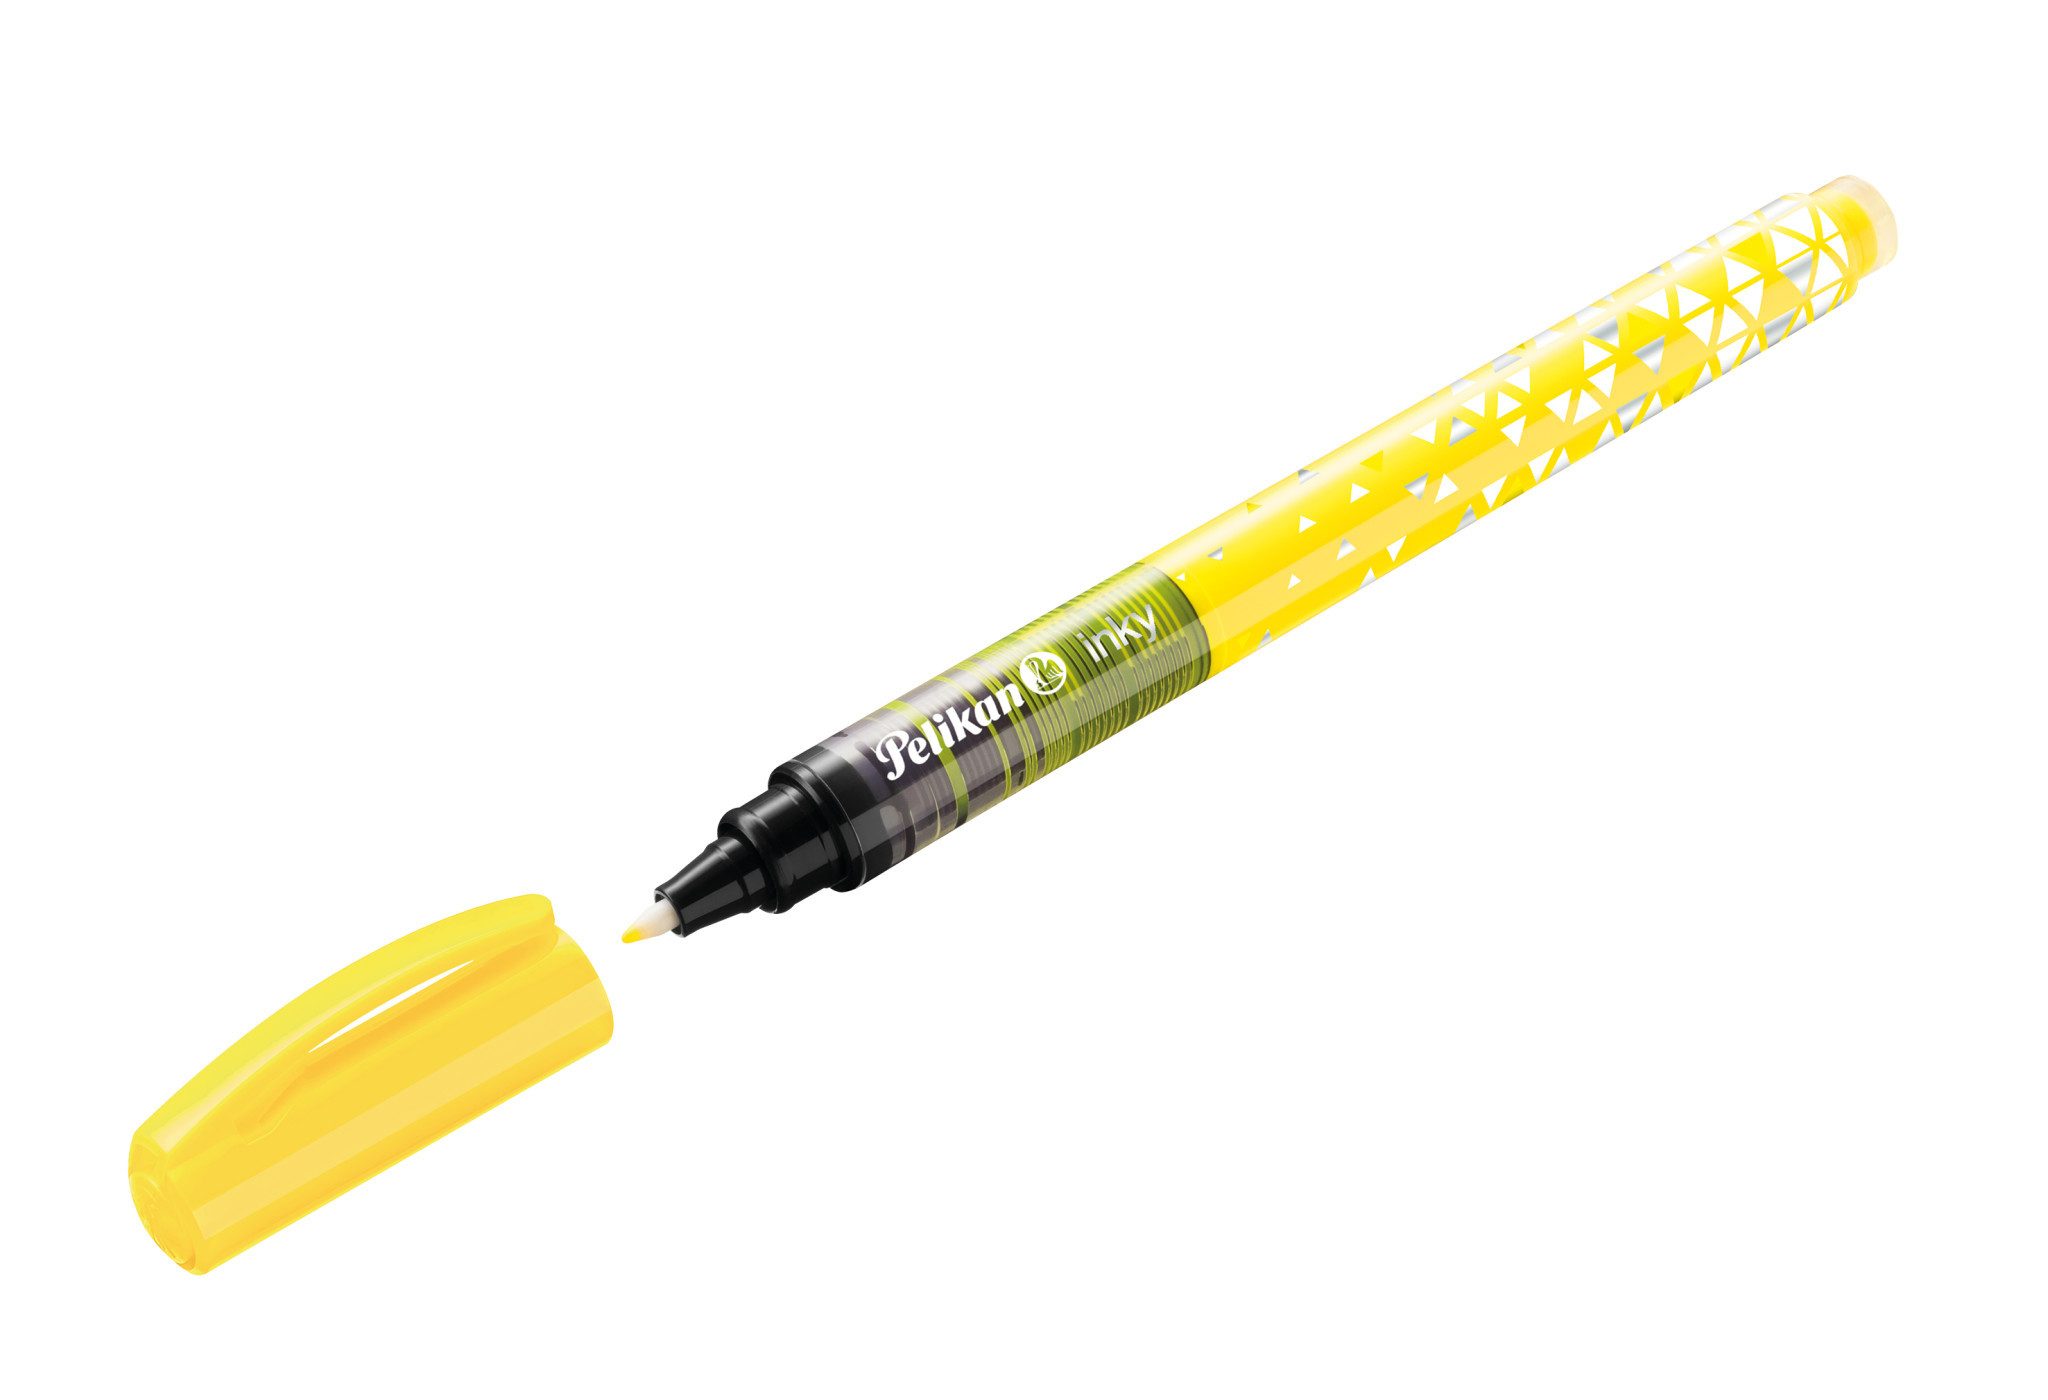 Pelikan Schreibtischkalender Tintenschreiber Inky 273 Neon Gelb 10 Stück in Faltschachtel